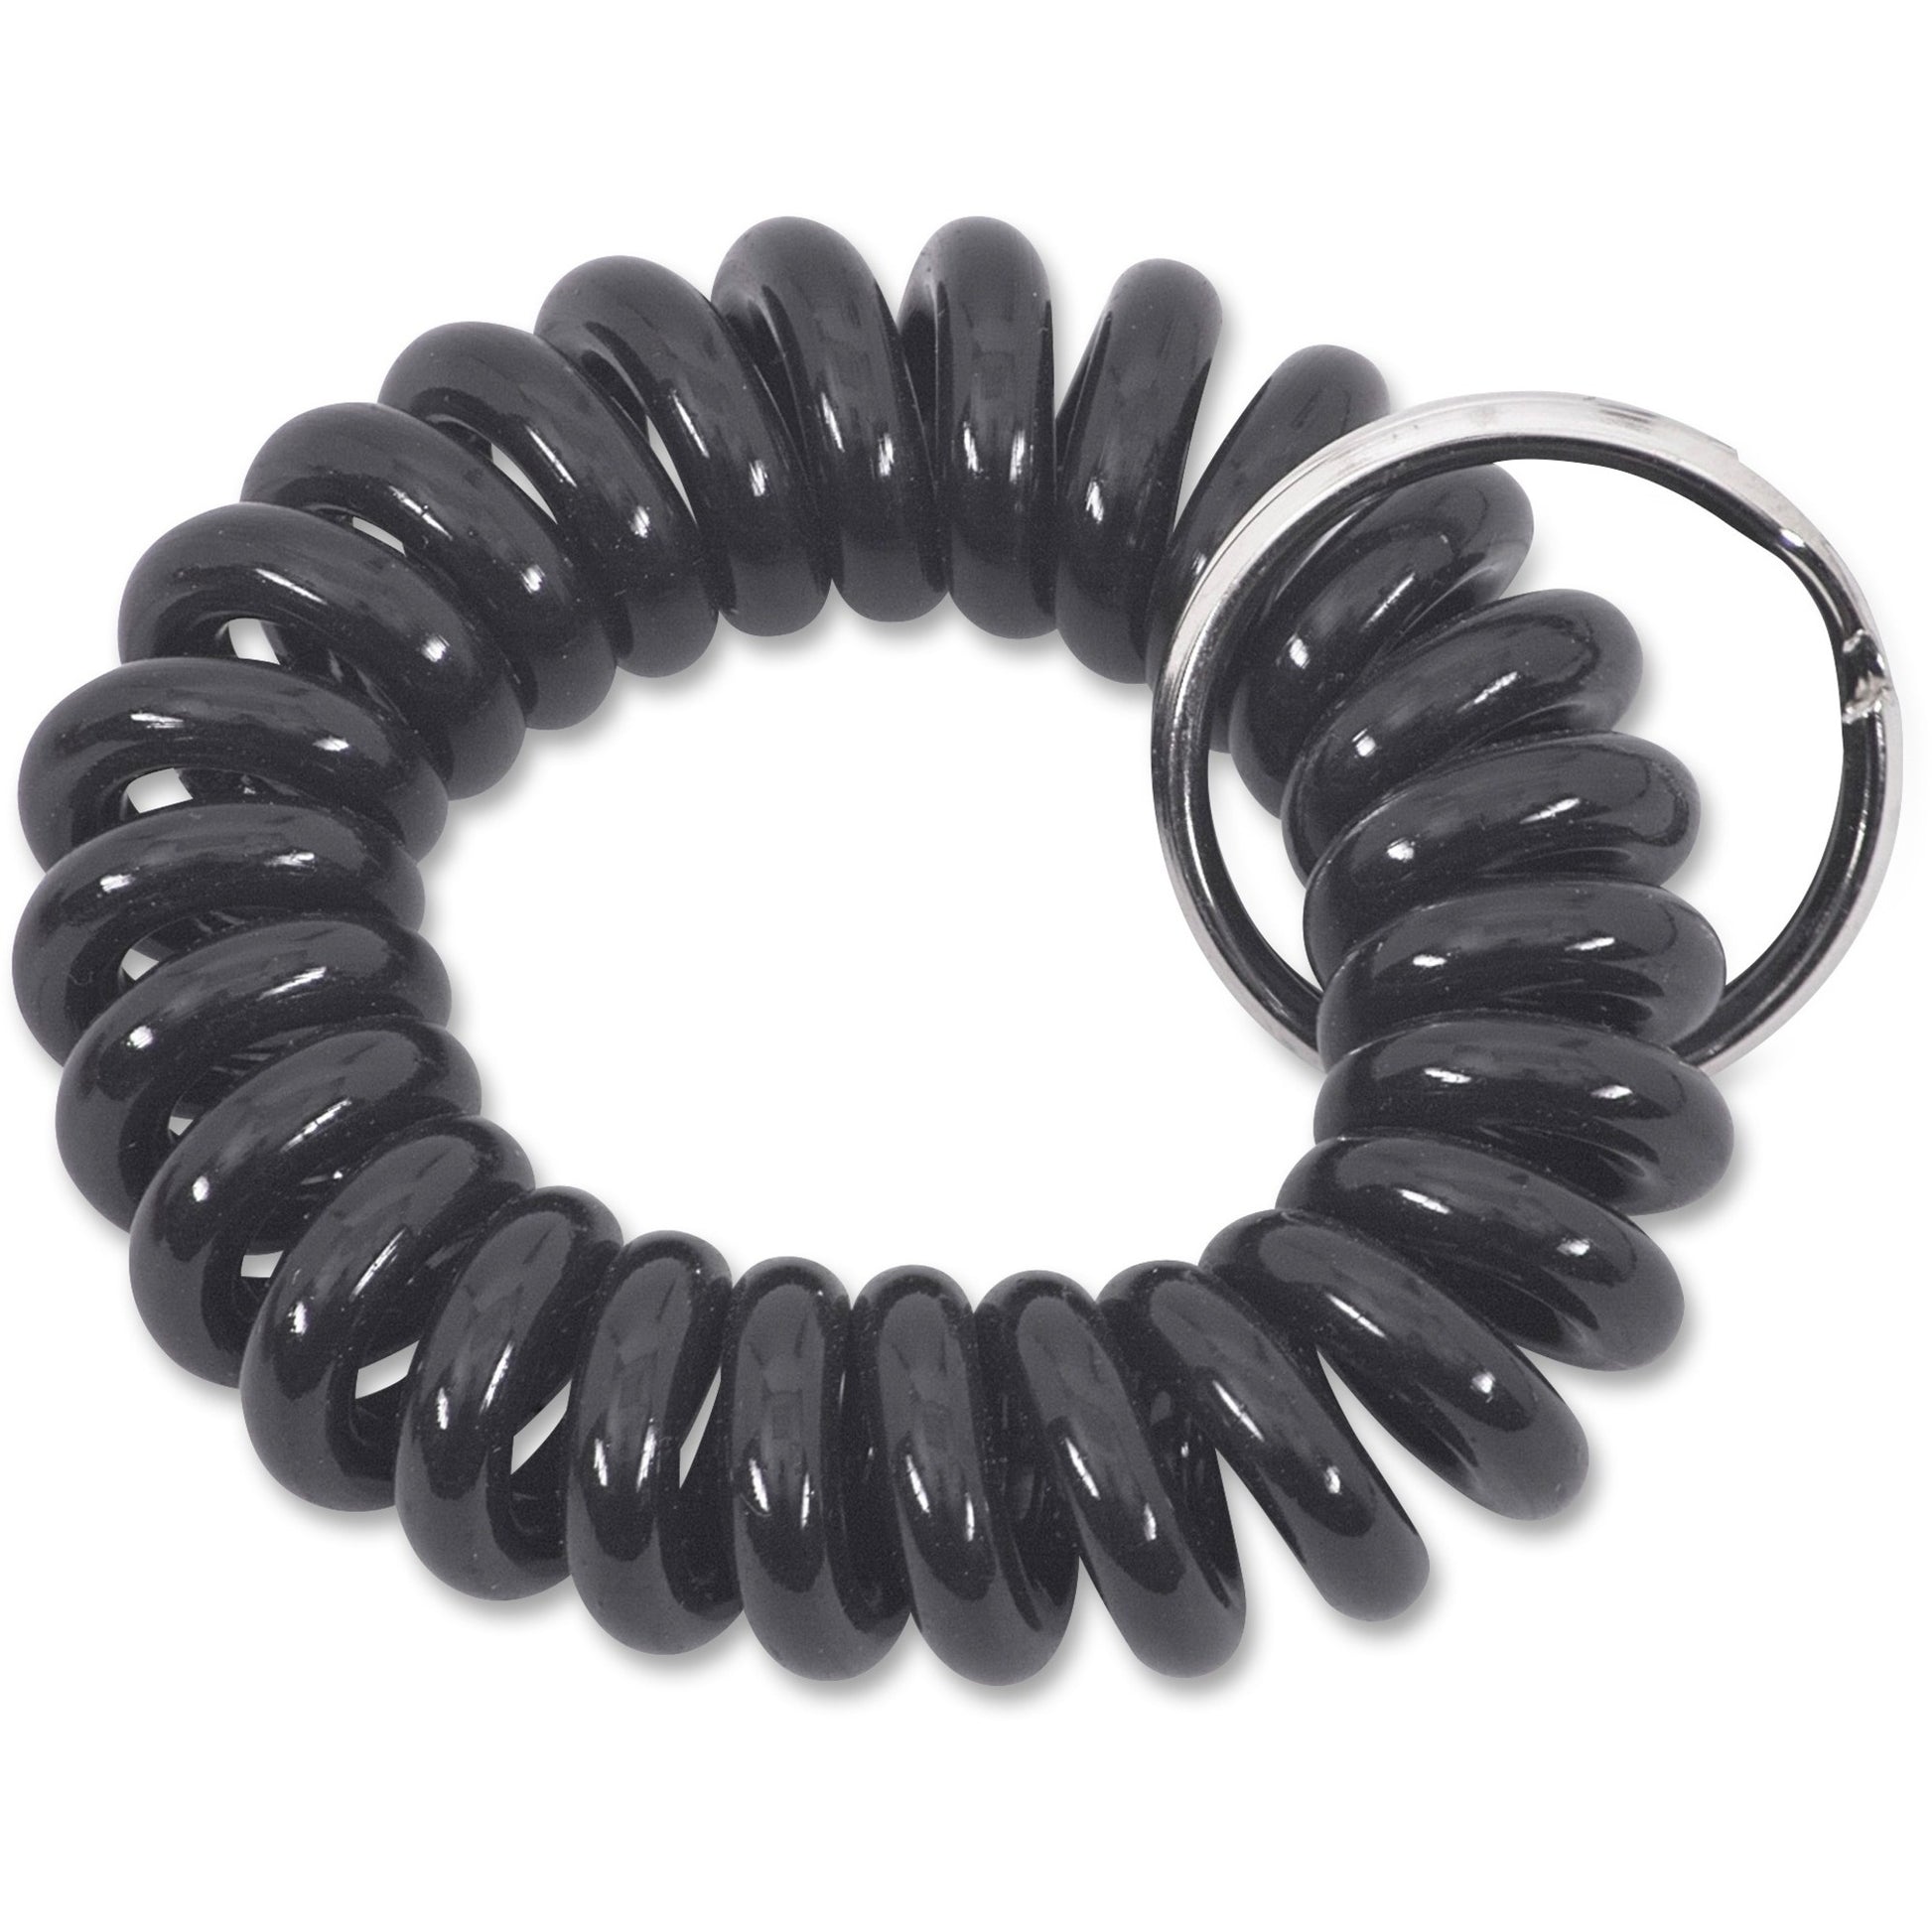 Merangue Key Ring Coil Wrist Bands